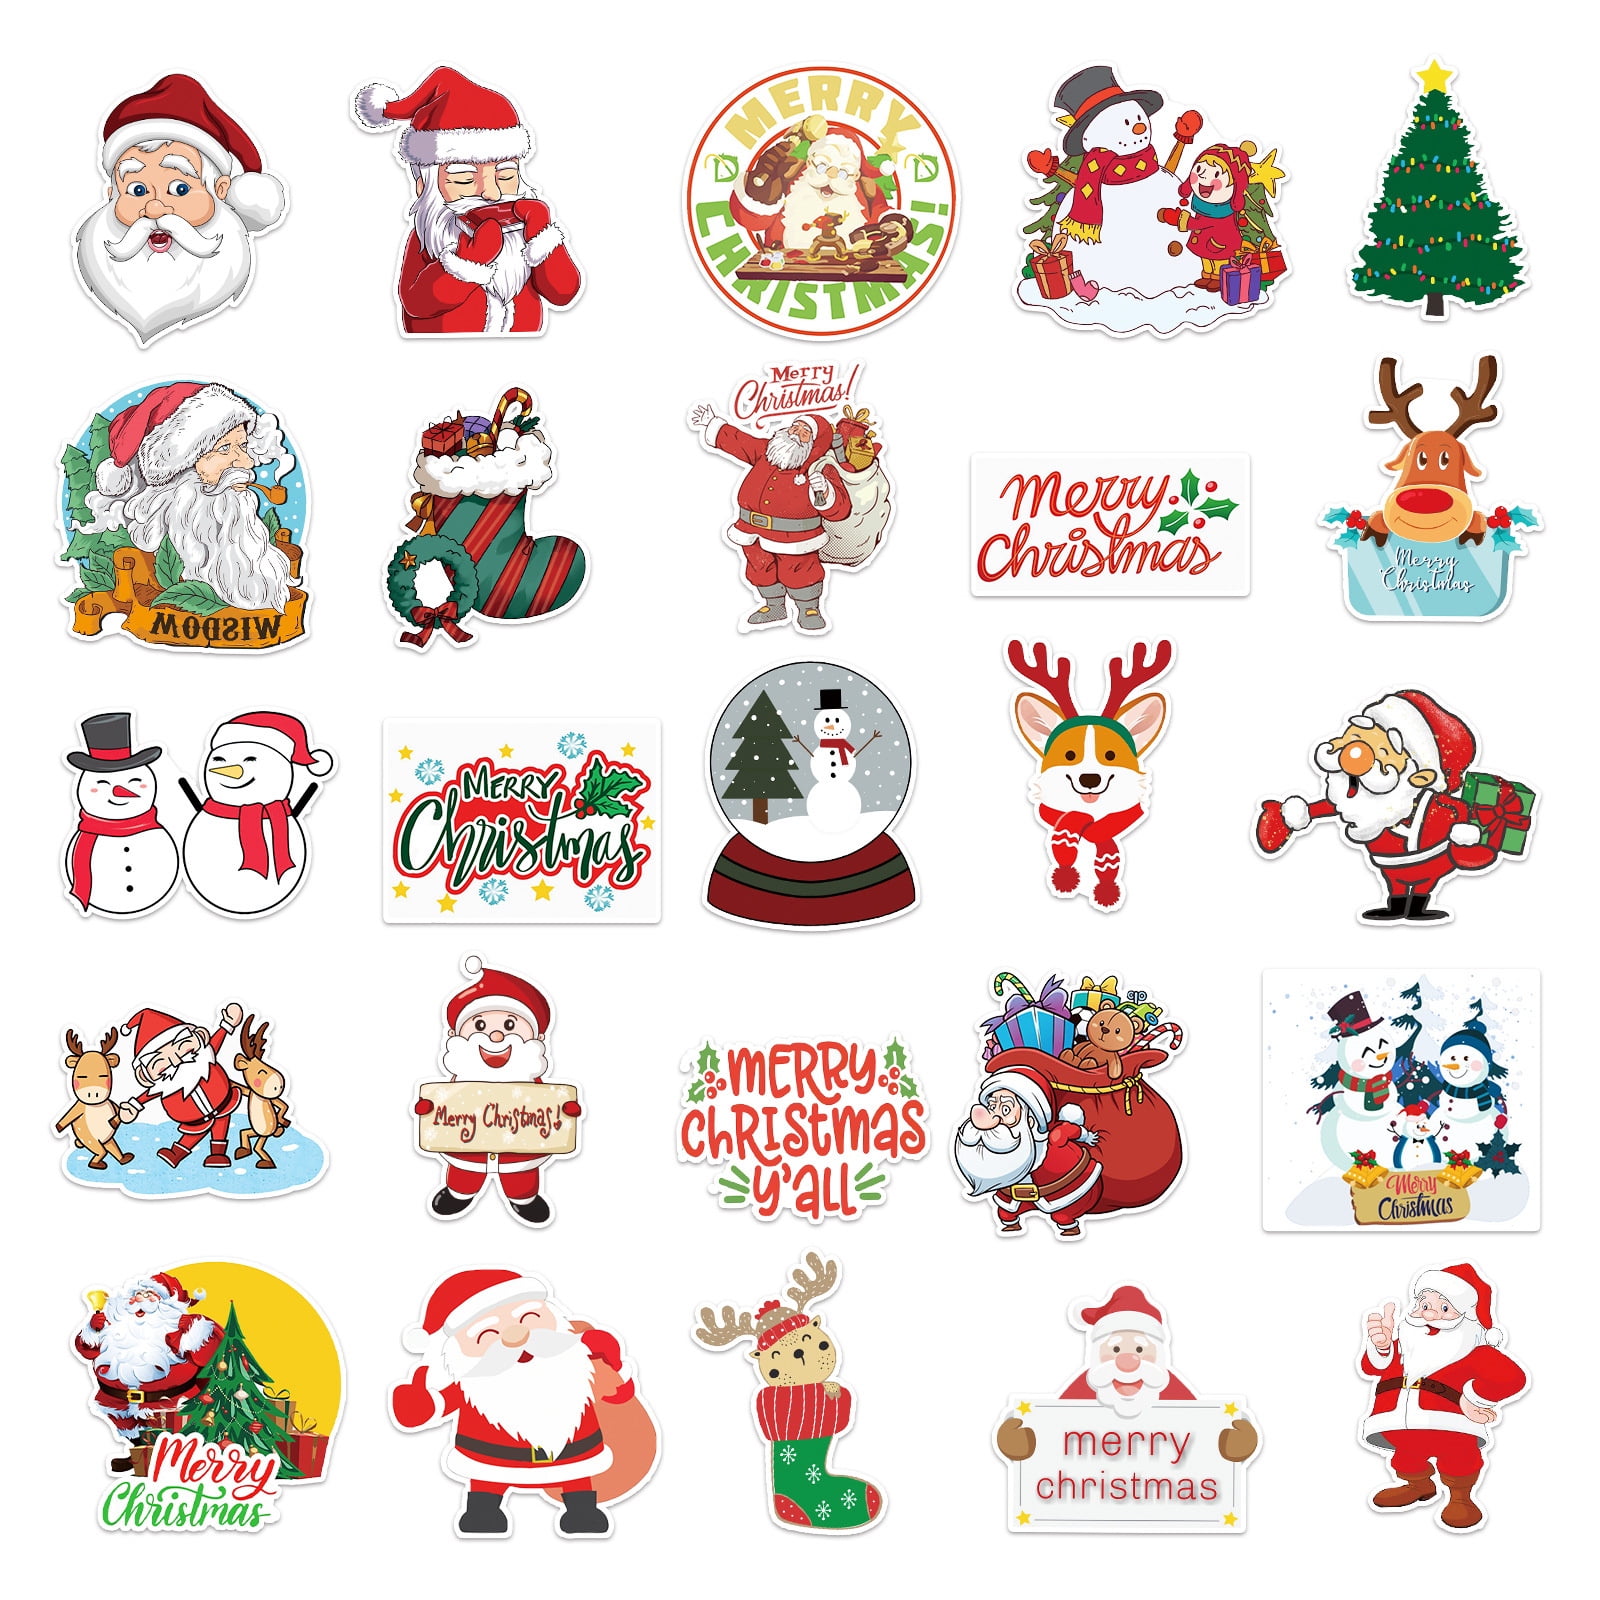  200 PCS Christmas Winter Stickers - Vinyl Waterproof Santa  Claus Snowflake Snowman Decals for Scrapbooking Laptop Water Bottles Flask  Envelopes Cards - Craft Sticker Bulk Gift for Teens Kids Adults :  Electronics